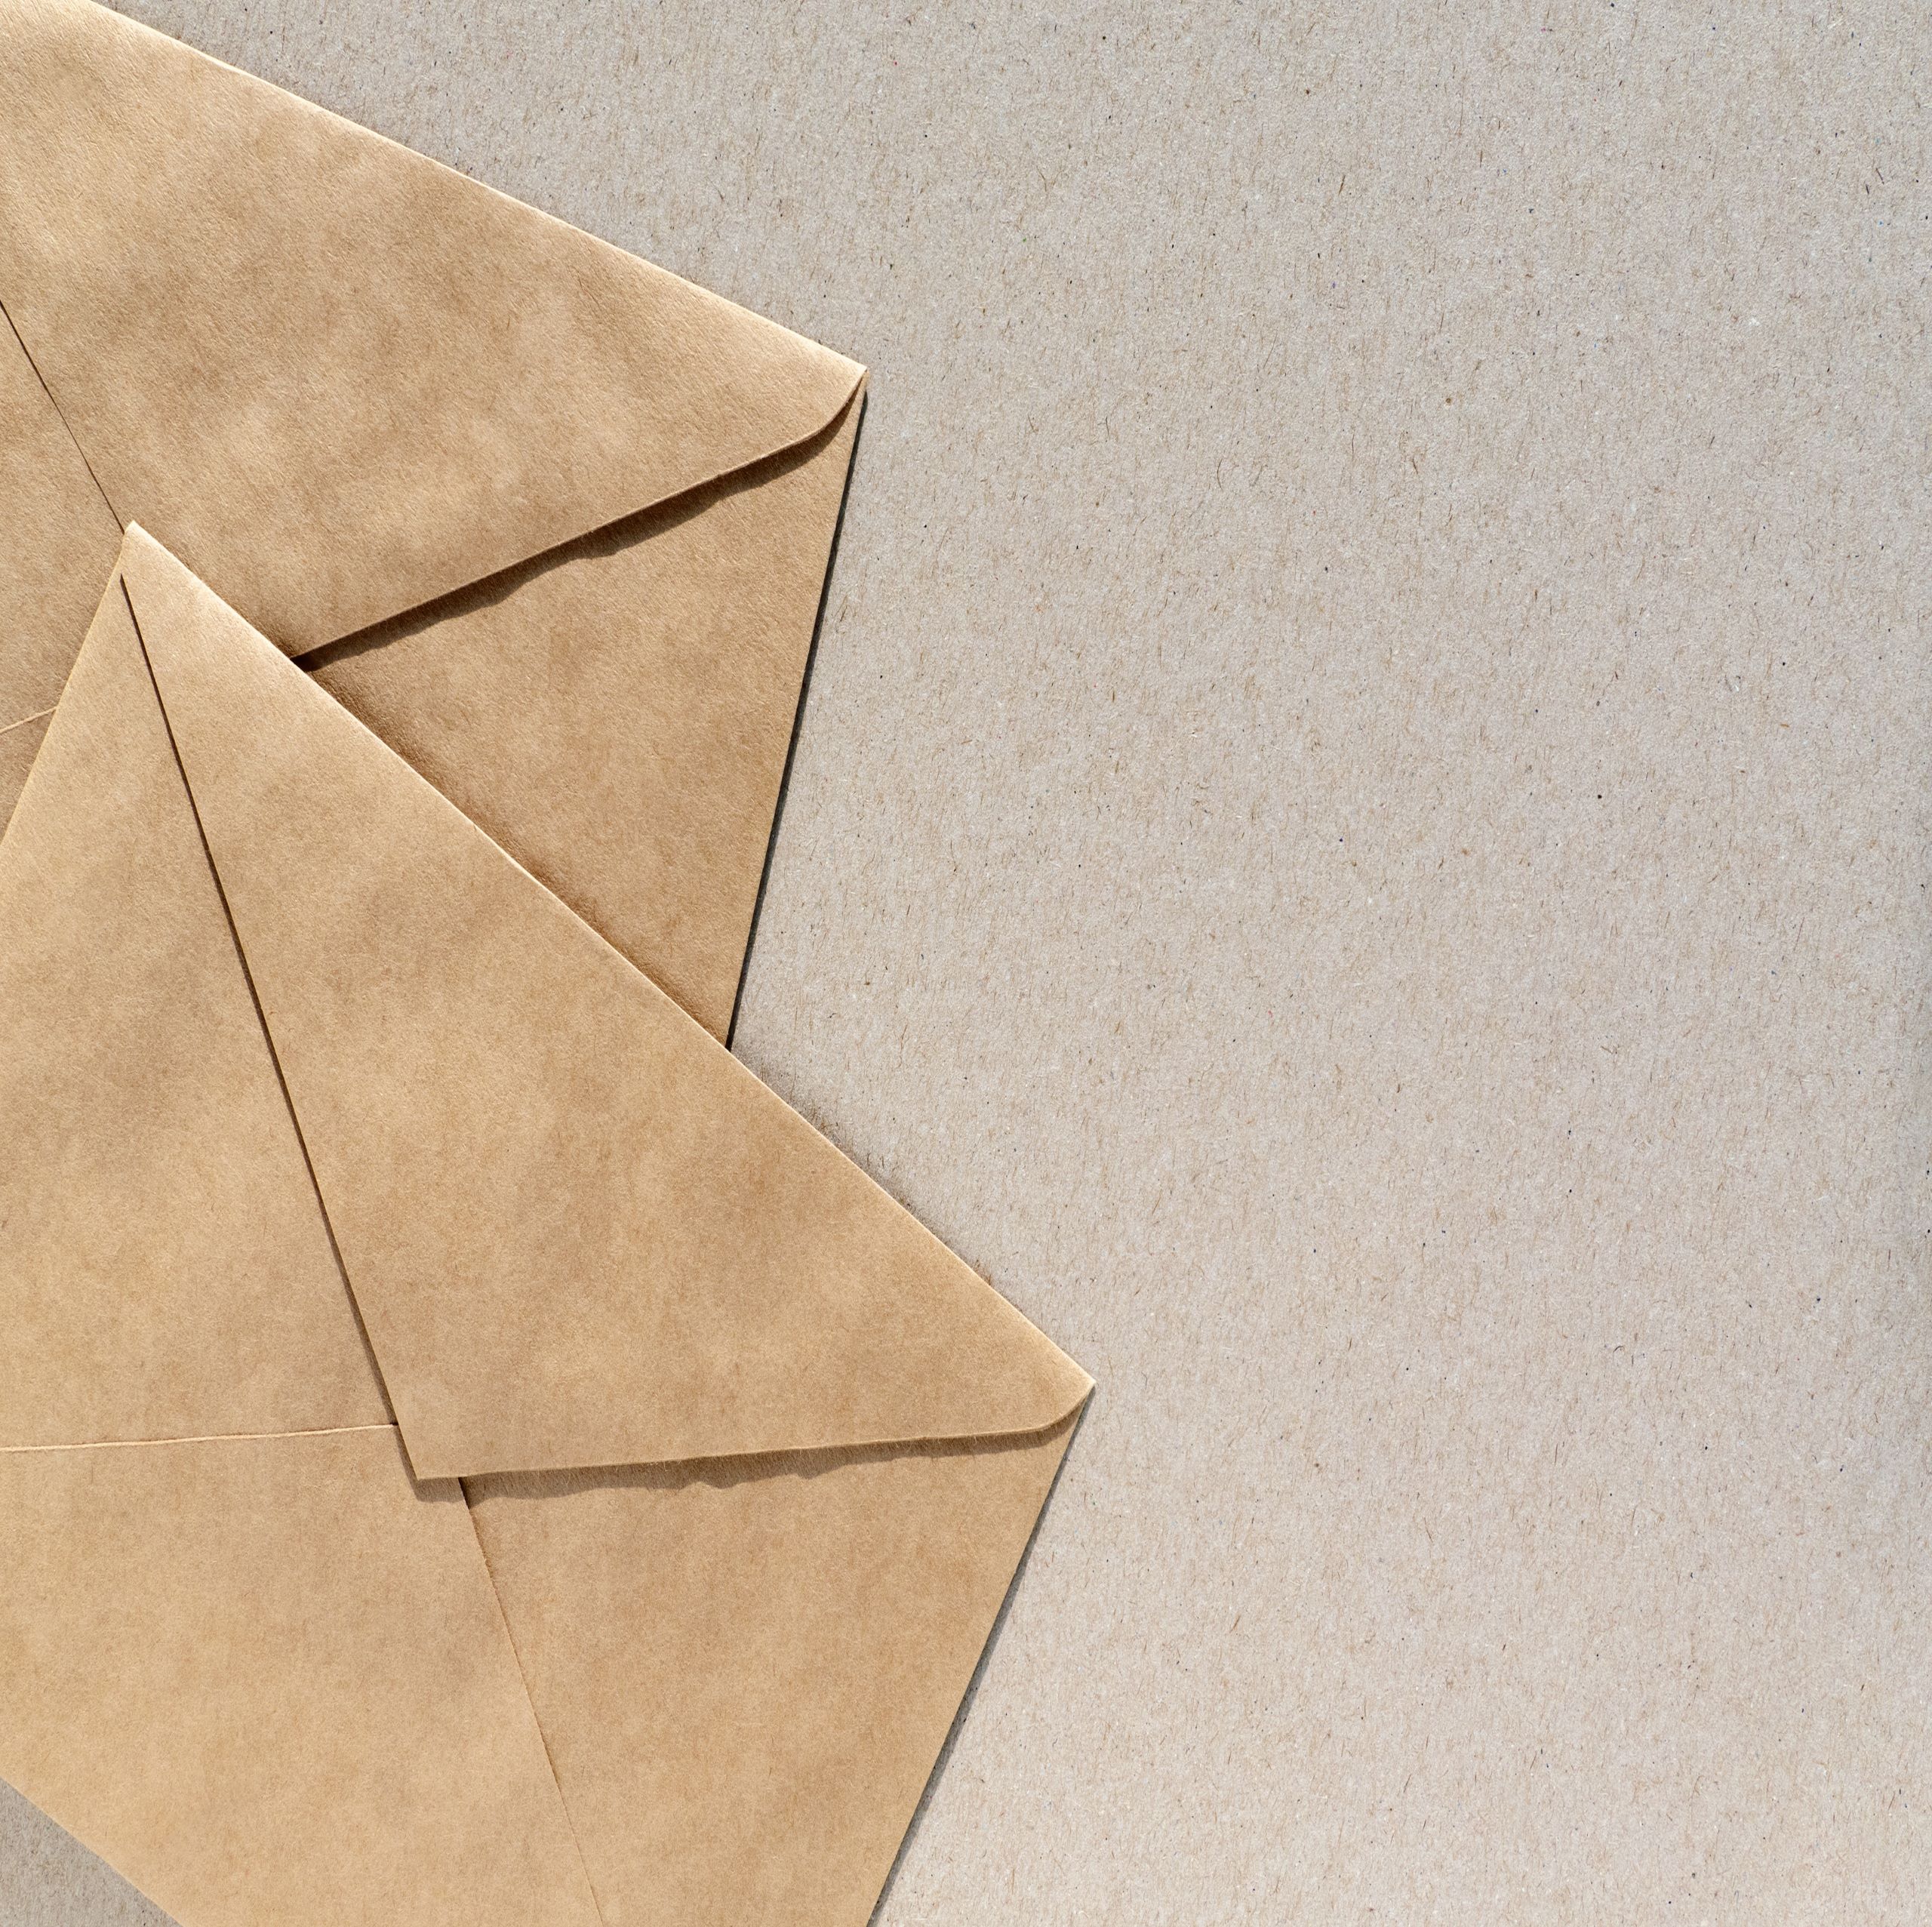 Envelopes 2